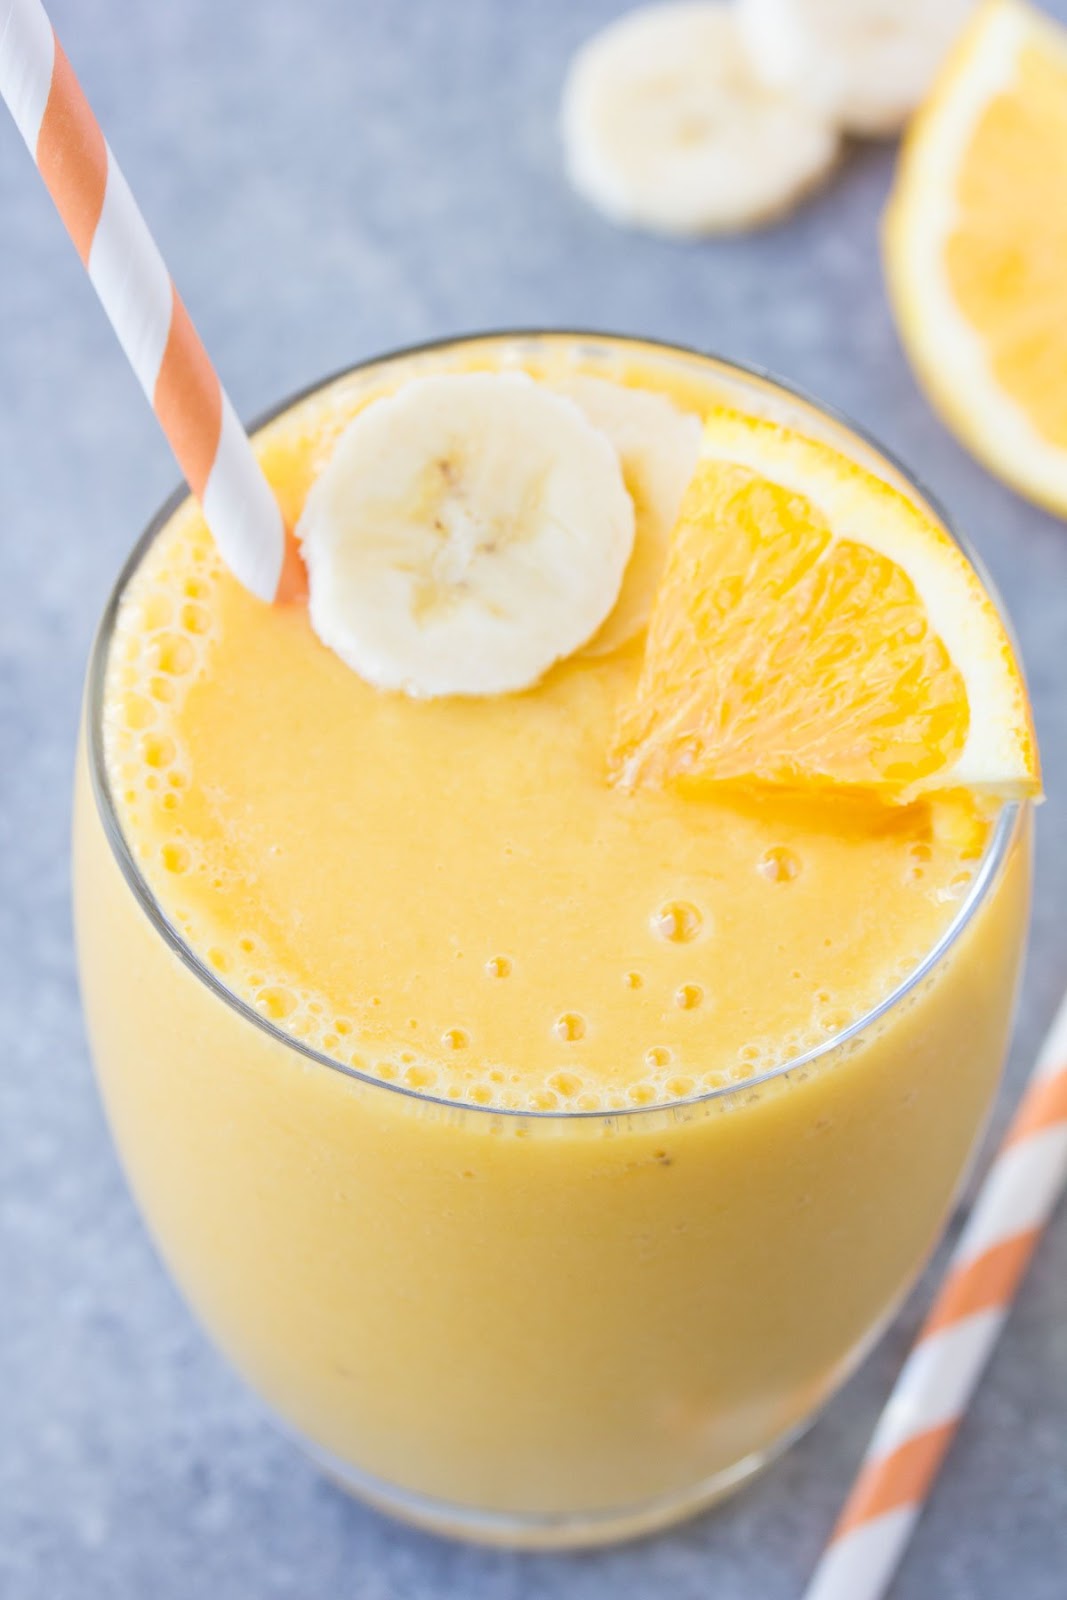 Immunity Boosting Orange Smoothie! This healthy smoothie packs a hefty dose of vitamin C! With orange, mango, banana and vanilla. | www.kristineskitchenblog.com